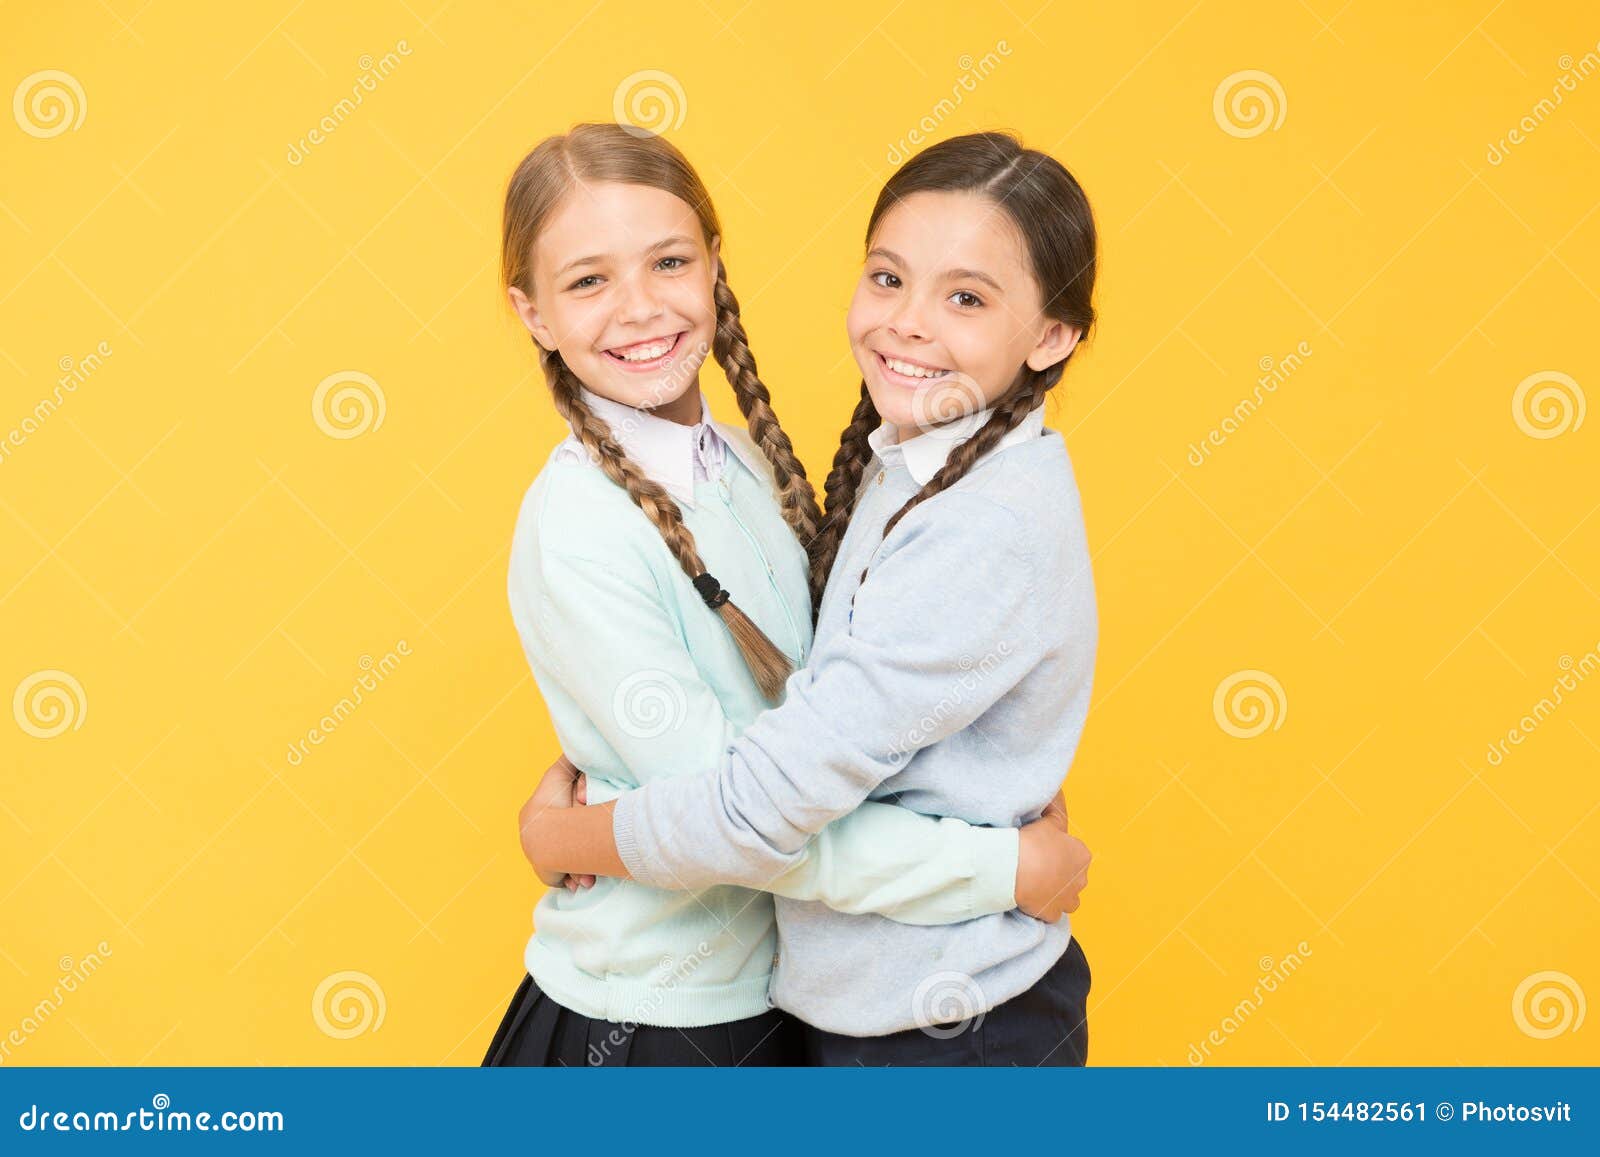 Friendly Relationship. Friendship Goals. Cute School Girls ...